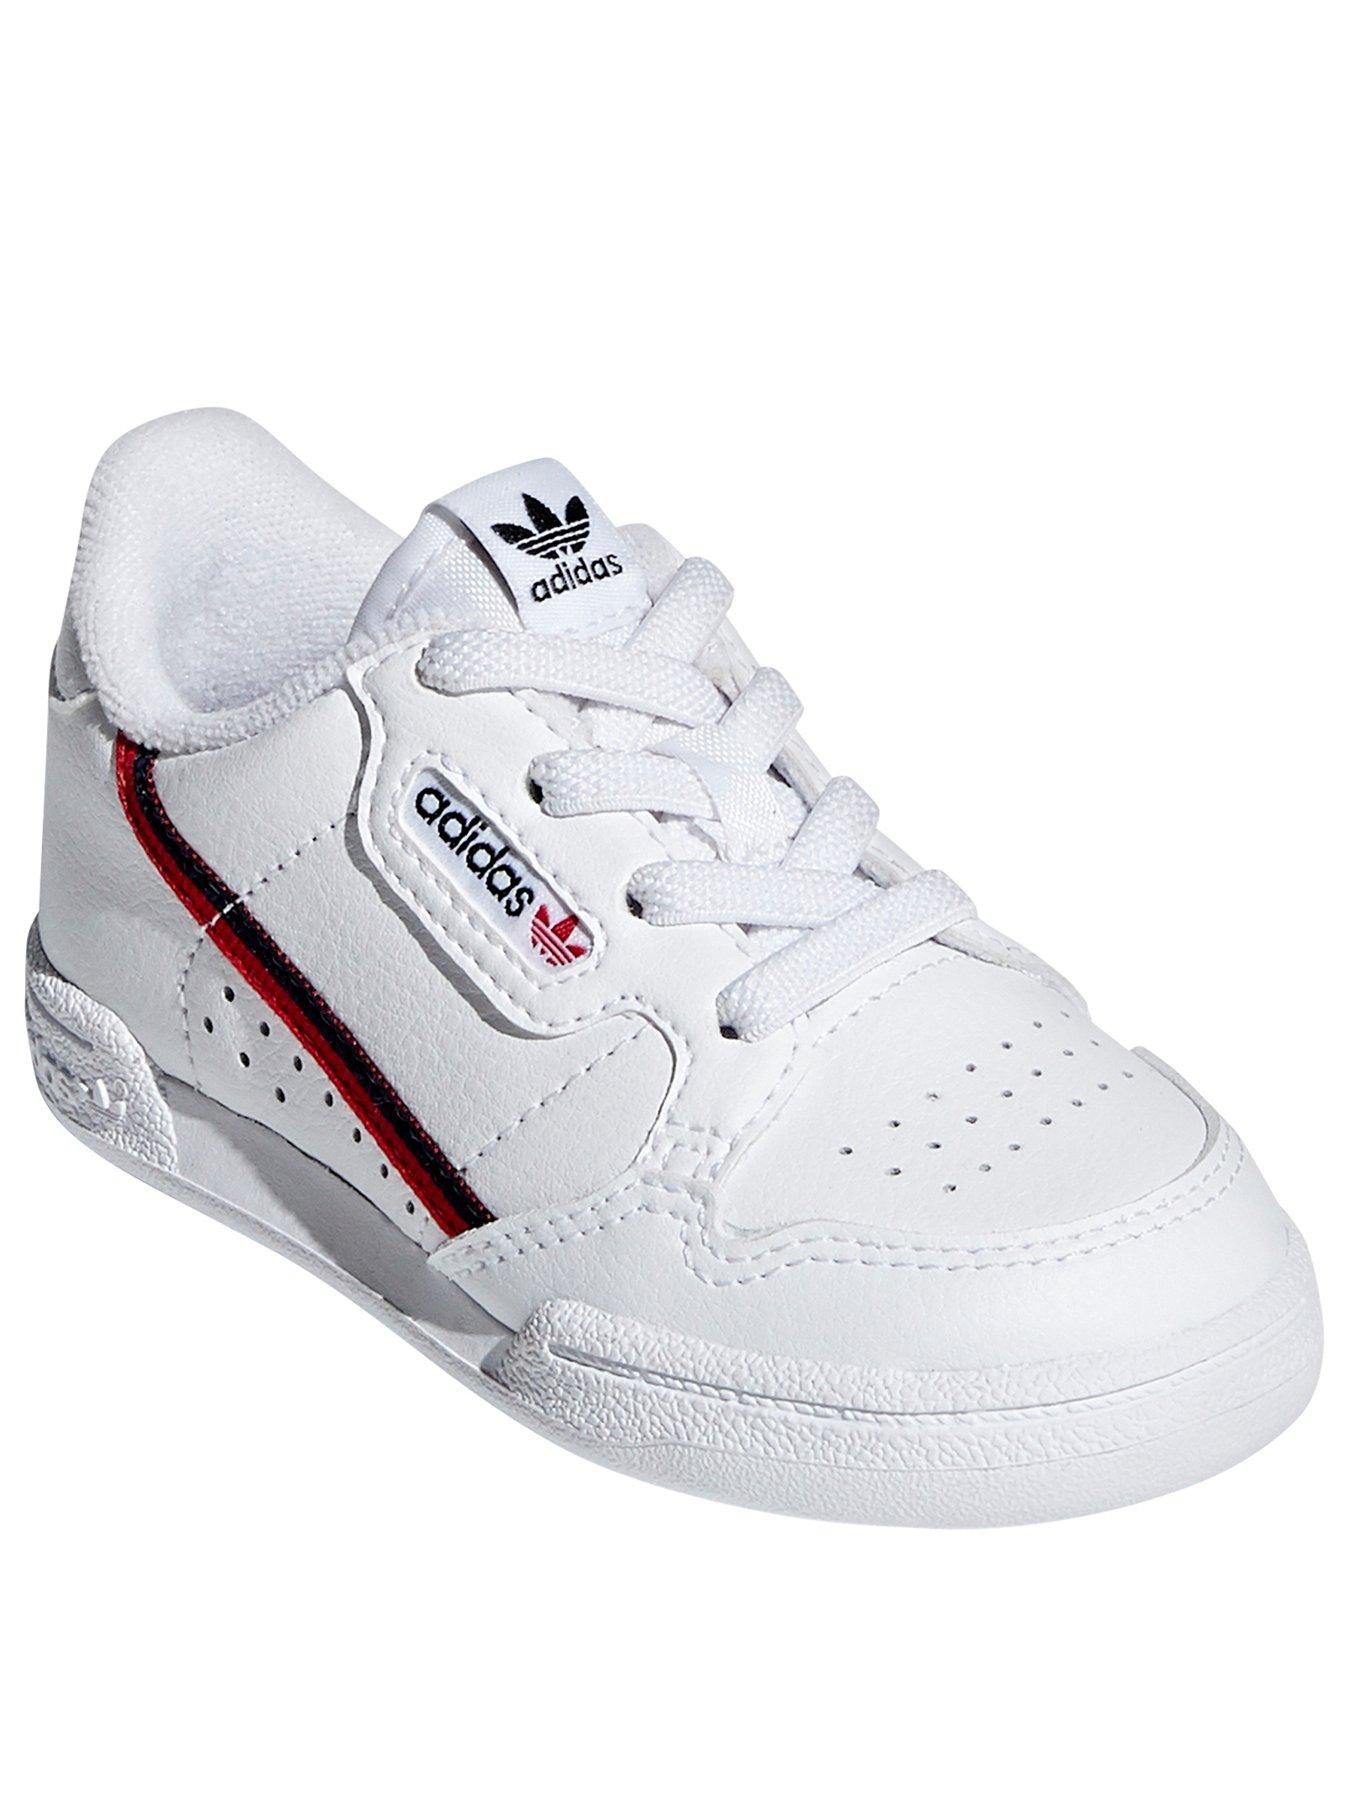 6 | Adidas | Kids footwear (sizes 10-2 